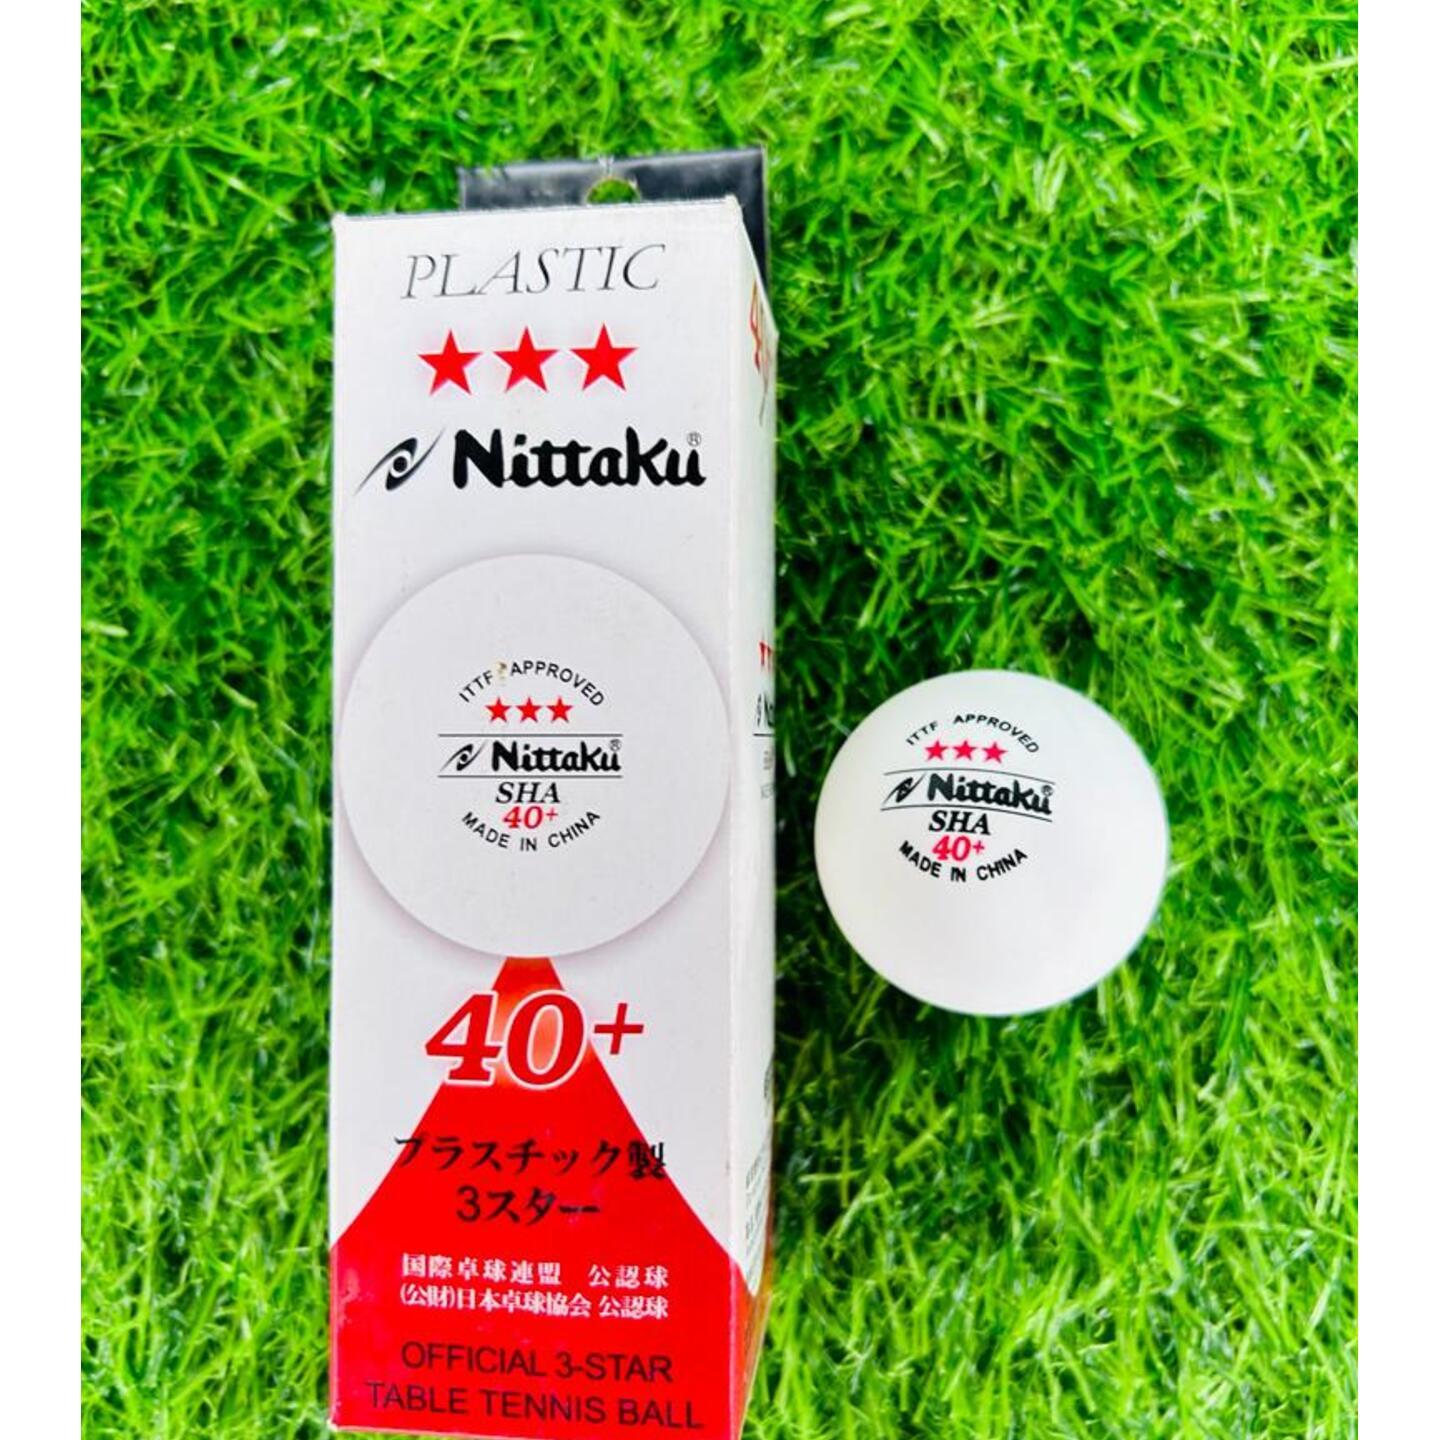 NITTAKU SHA 3 STAR PLASTIC TABLE TENNIS BALL